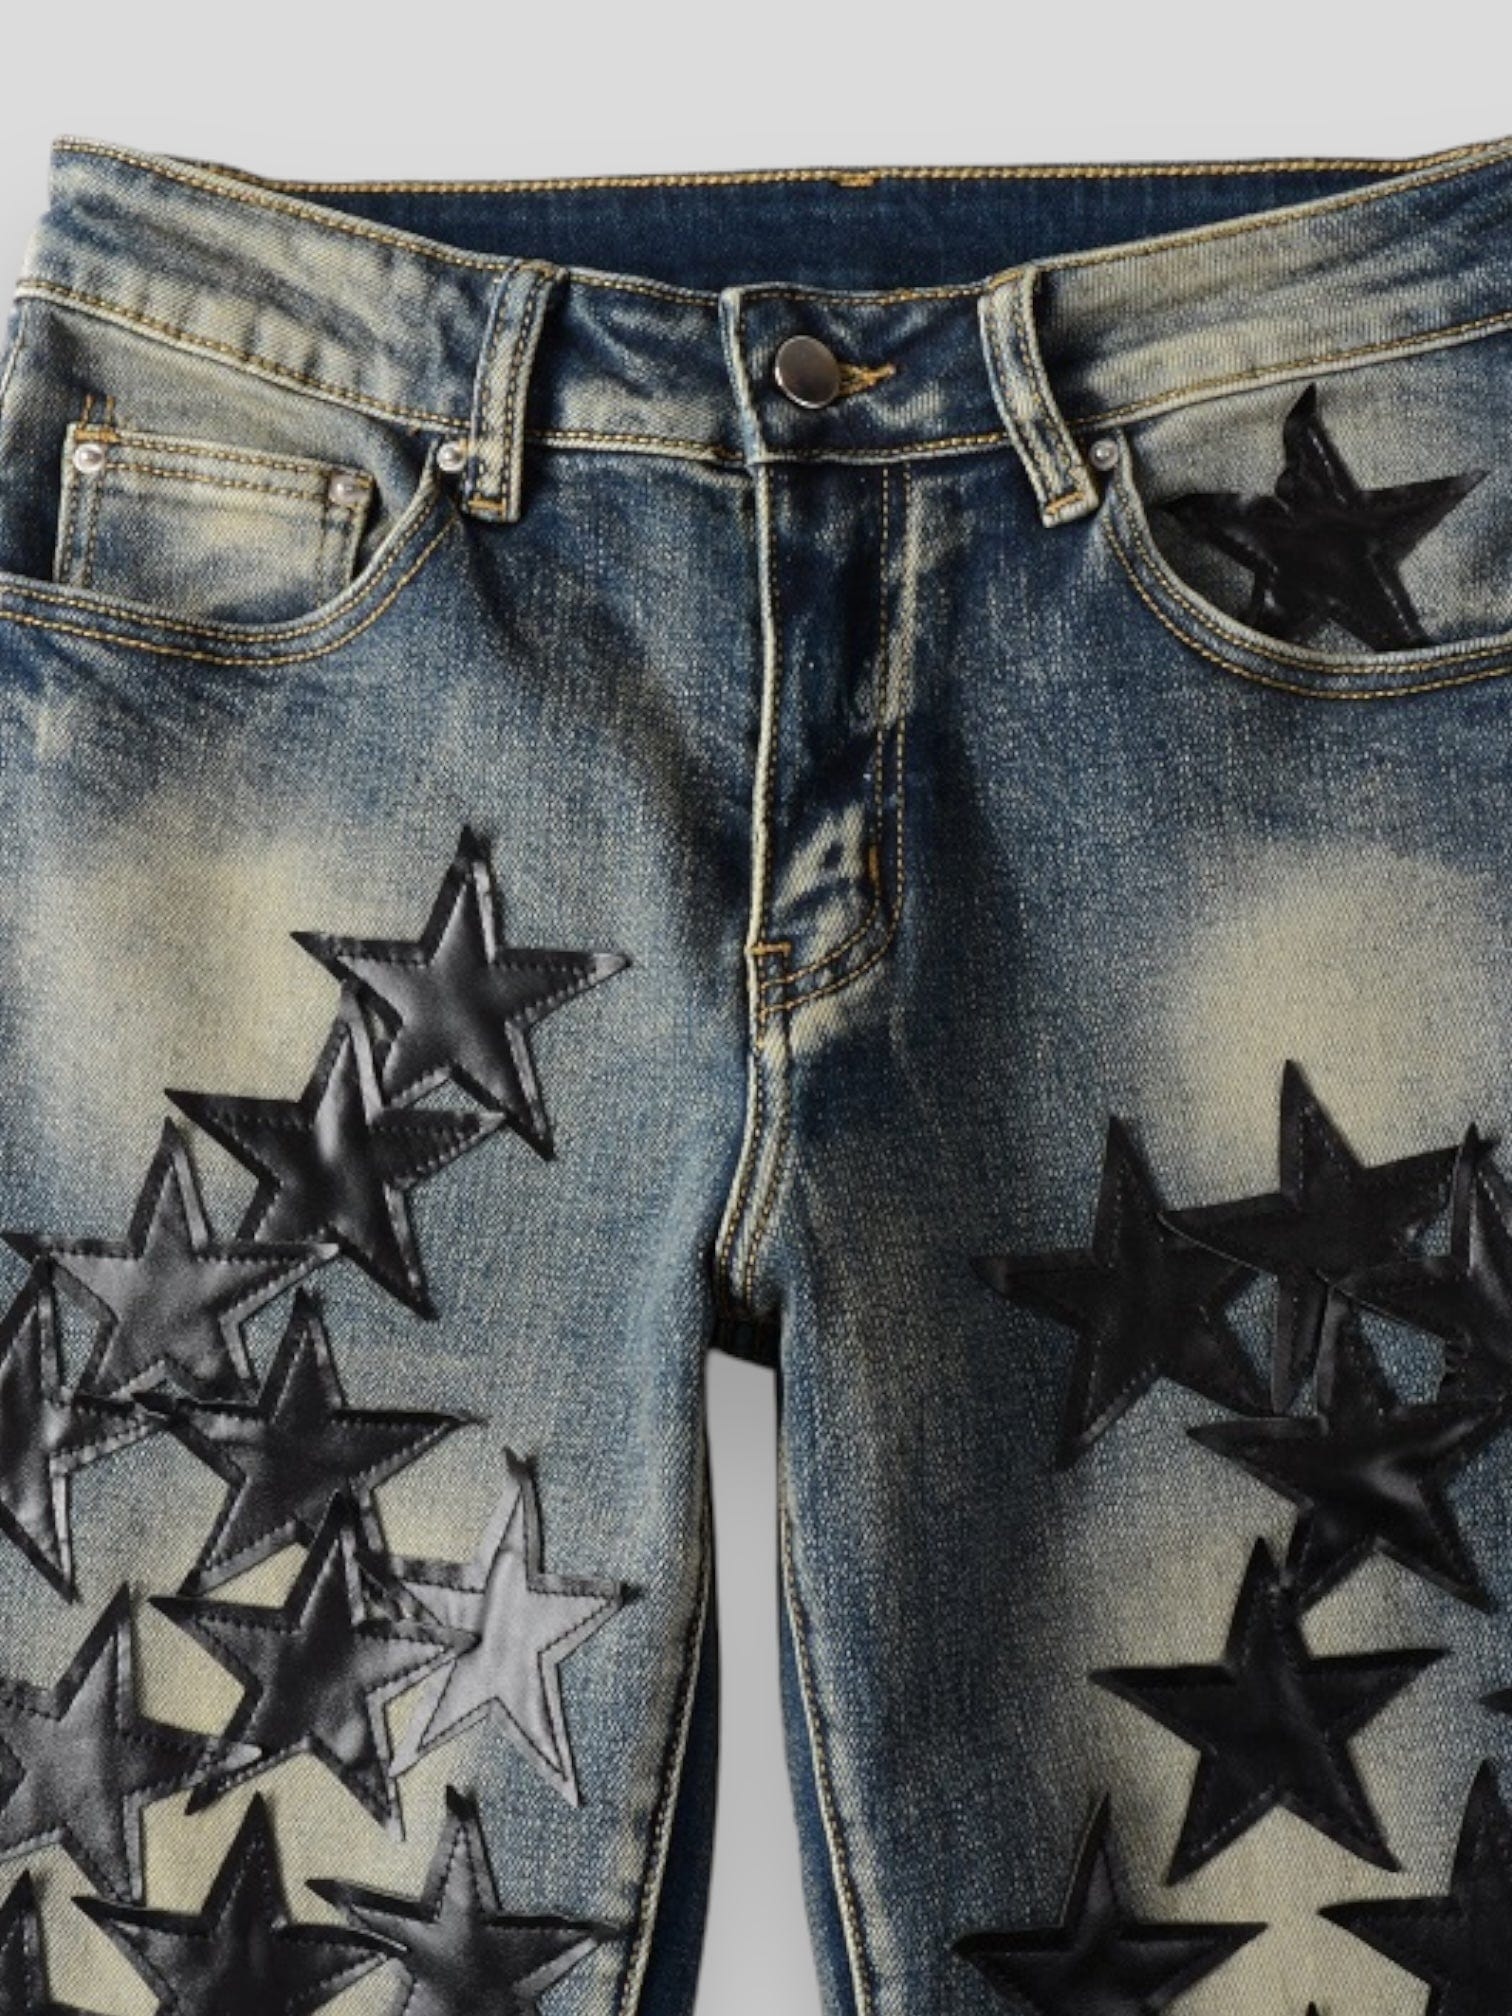 Urbandel pants Urbandel "A Star is Born Again Skinny Jeans